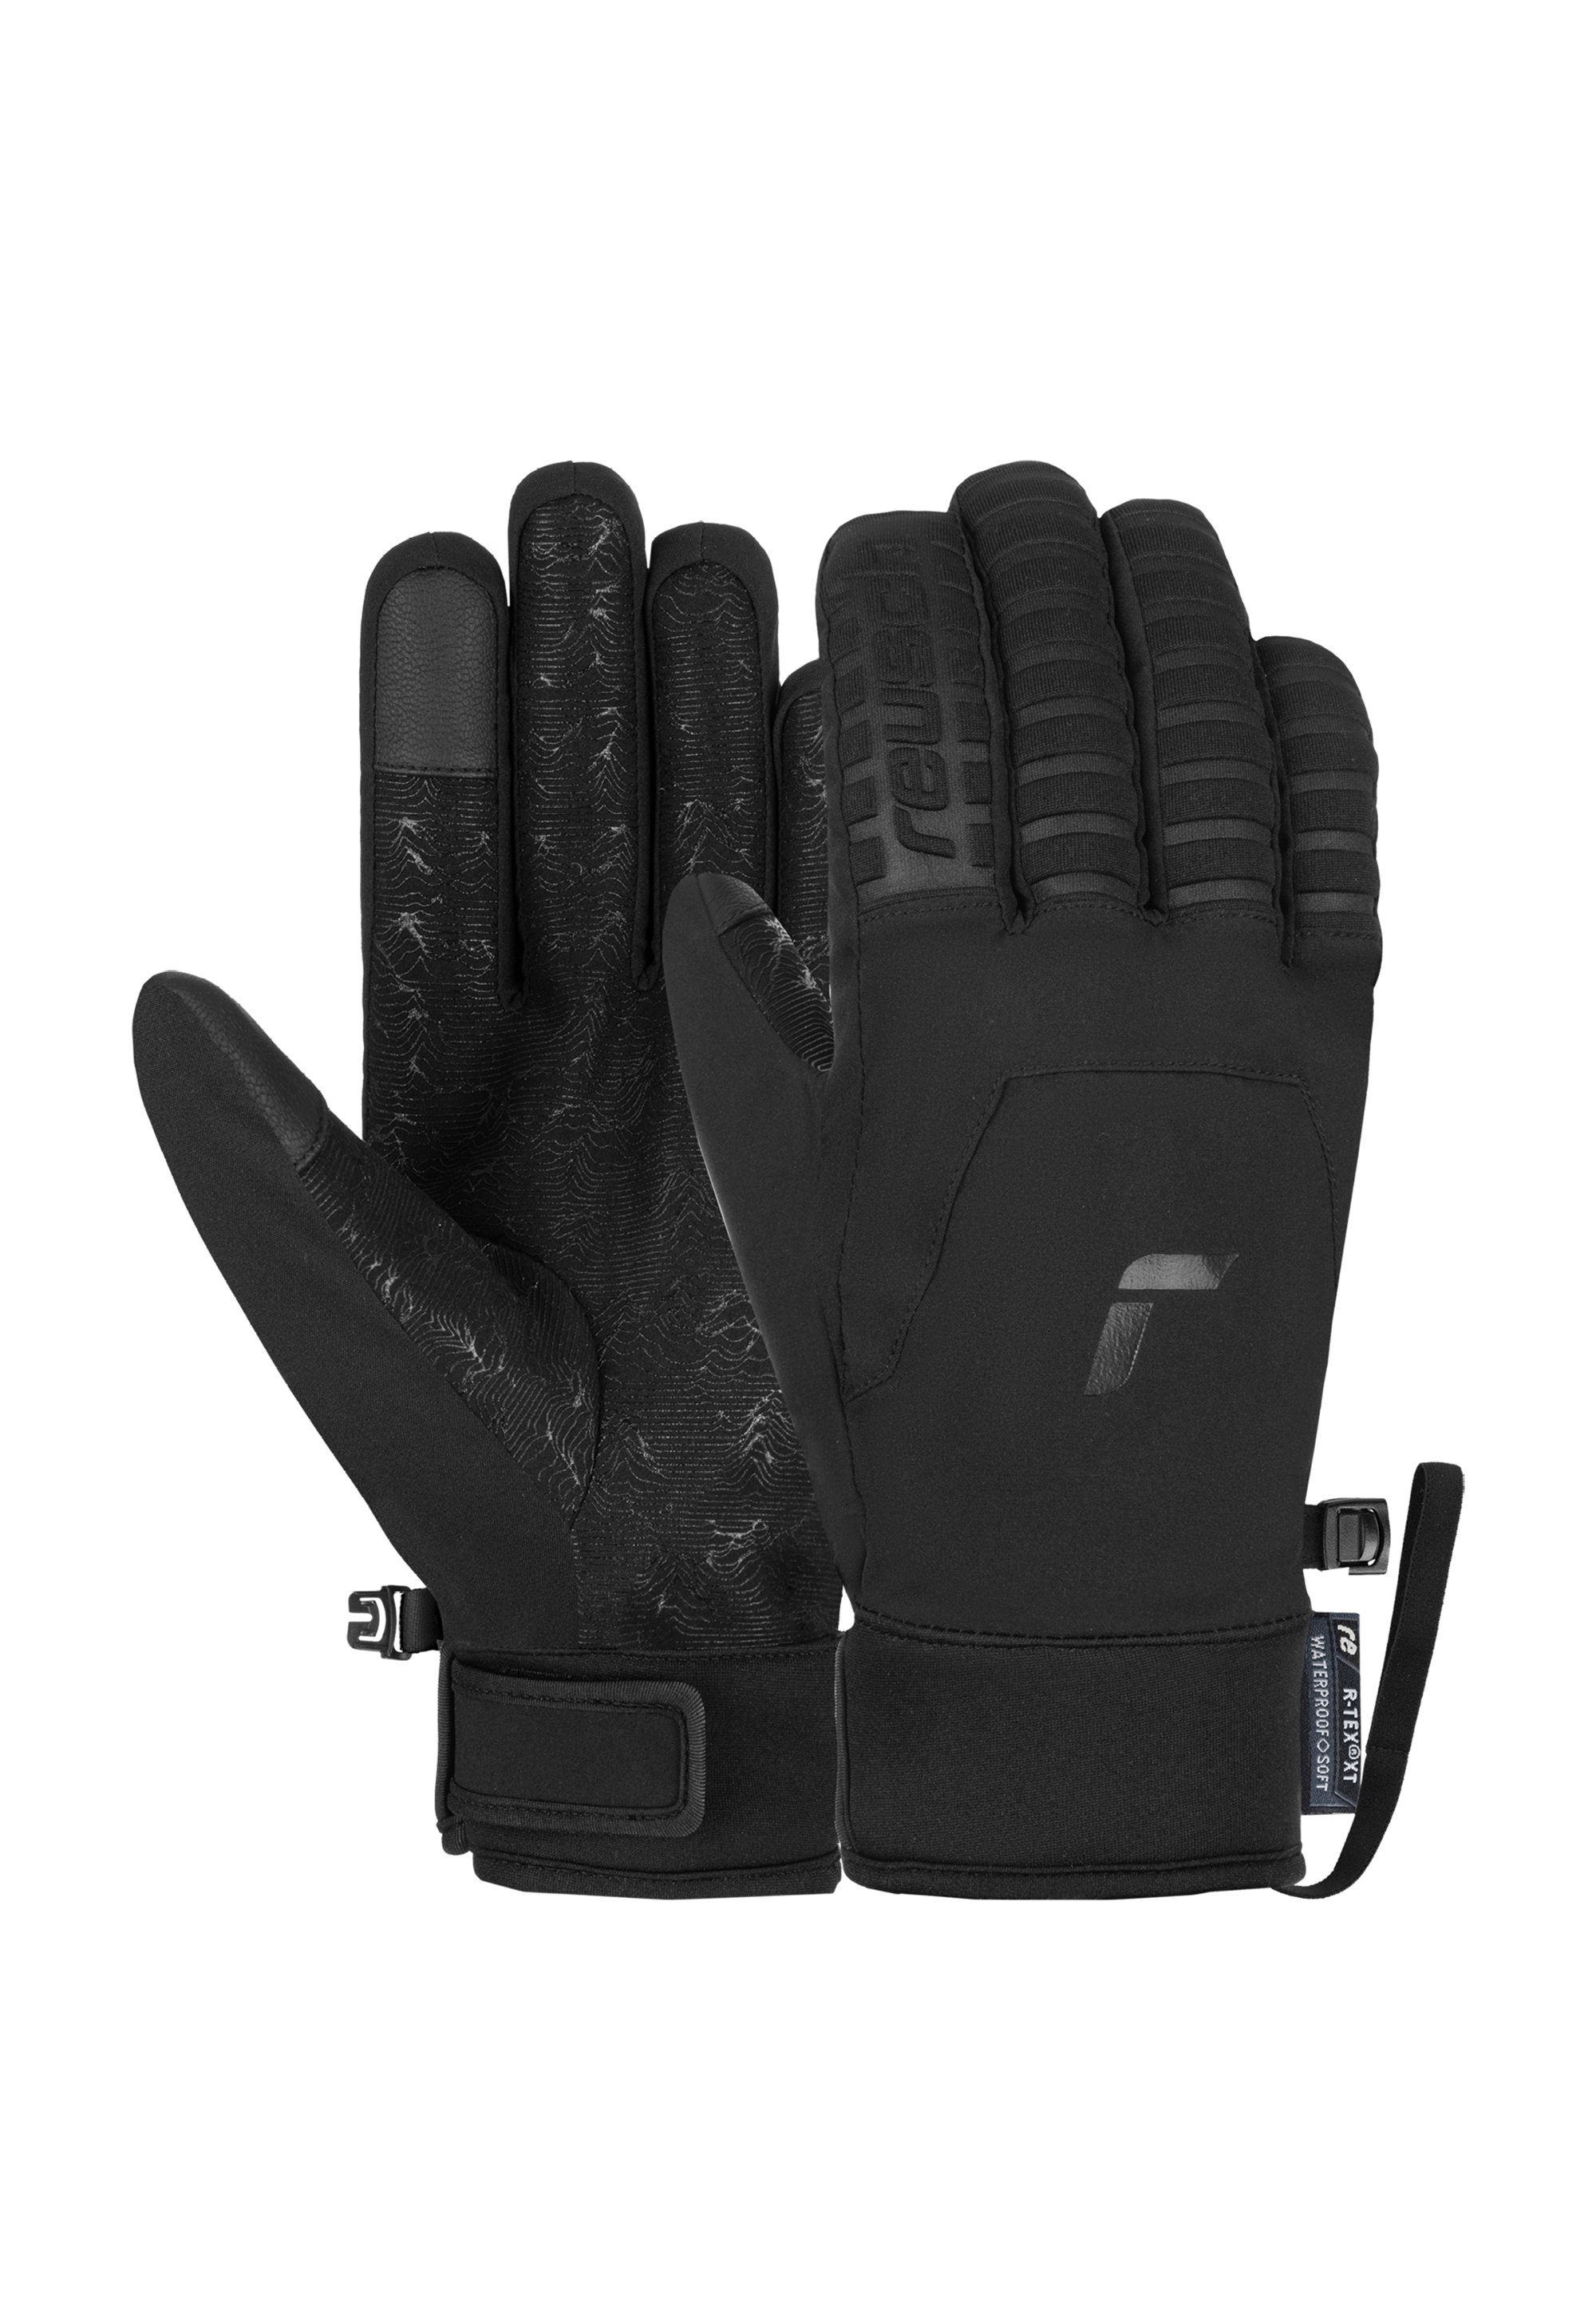 Reusch Skihandschuhe Raptor R-TEX XT TOUCH-TEC warm, wasserdicht und atmungsaktiv schwarz | Handschuhe